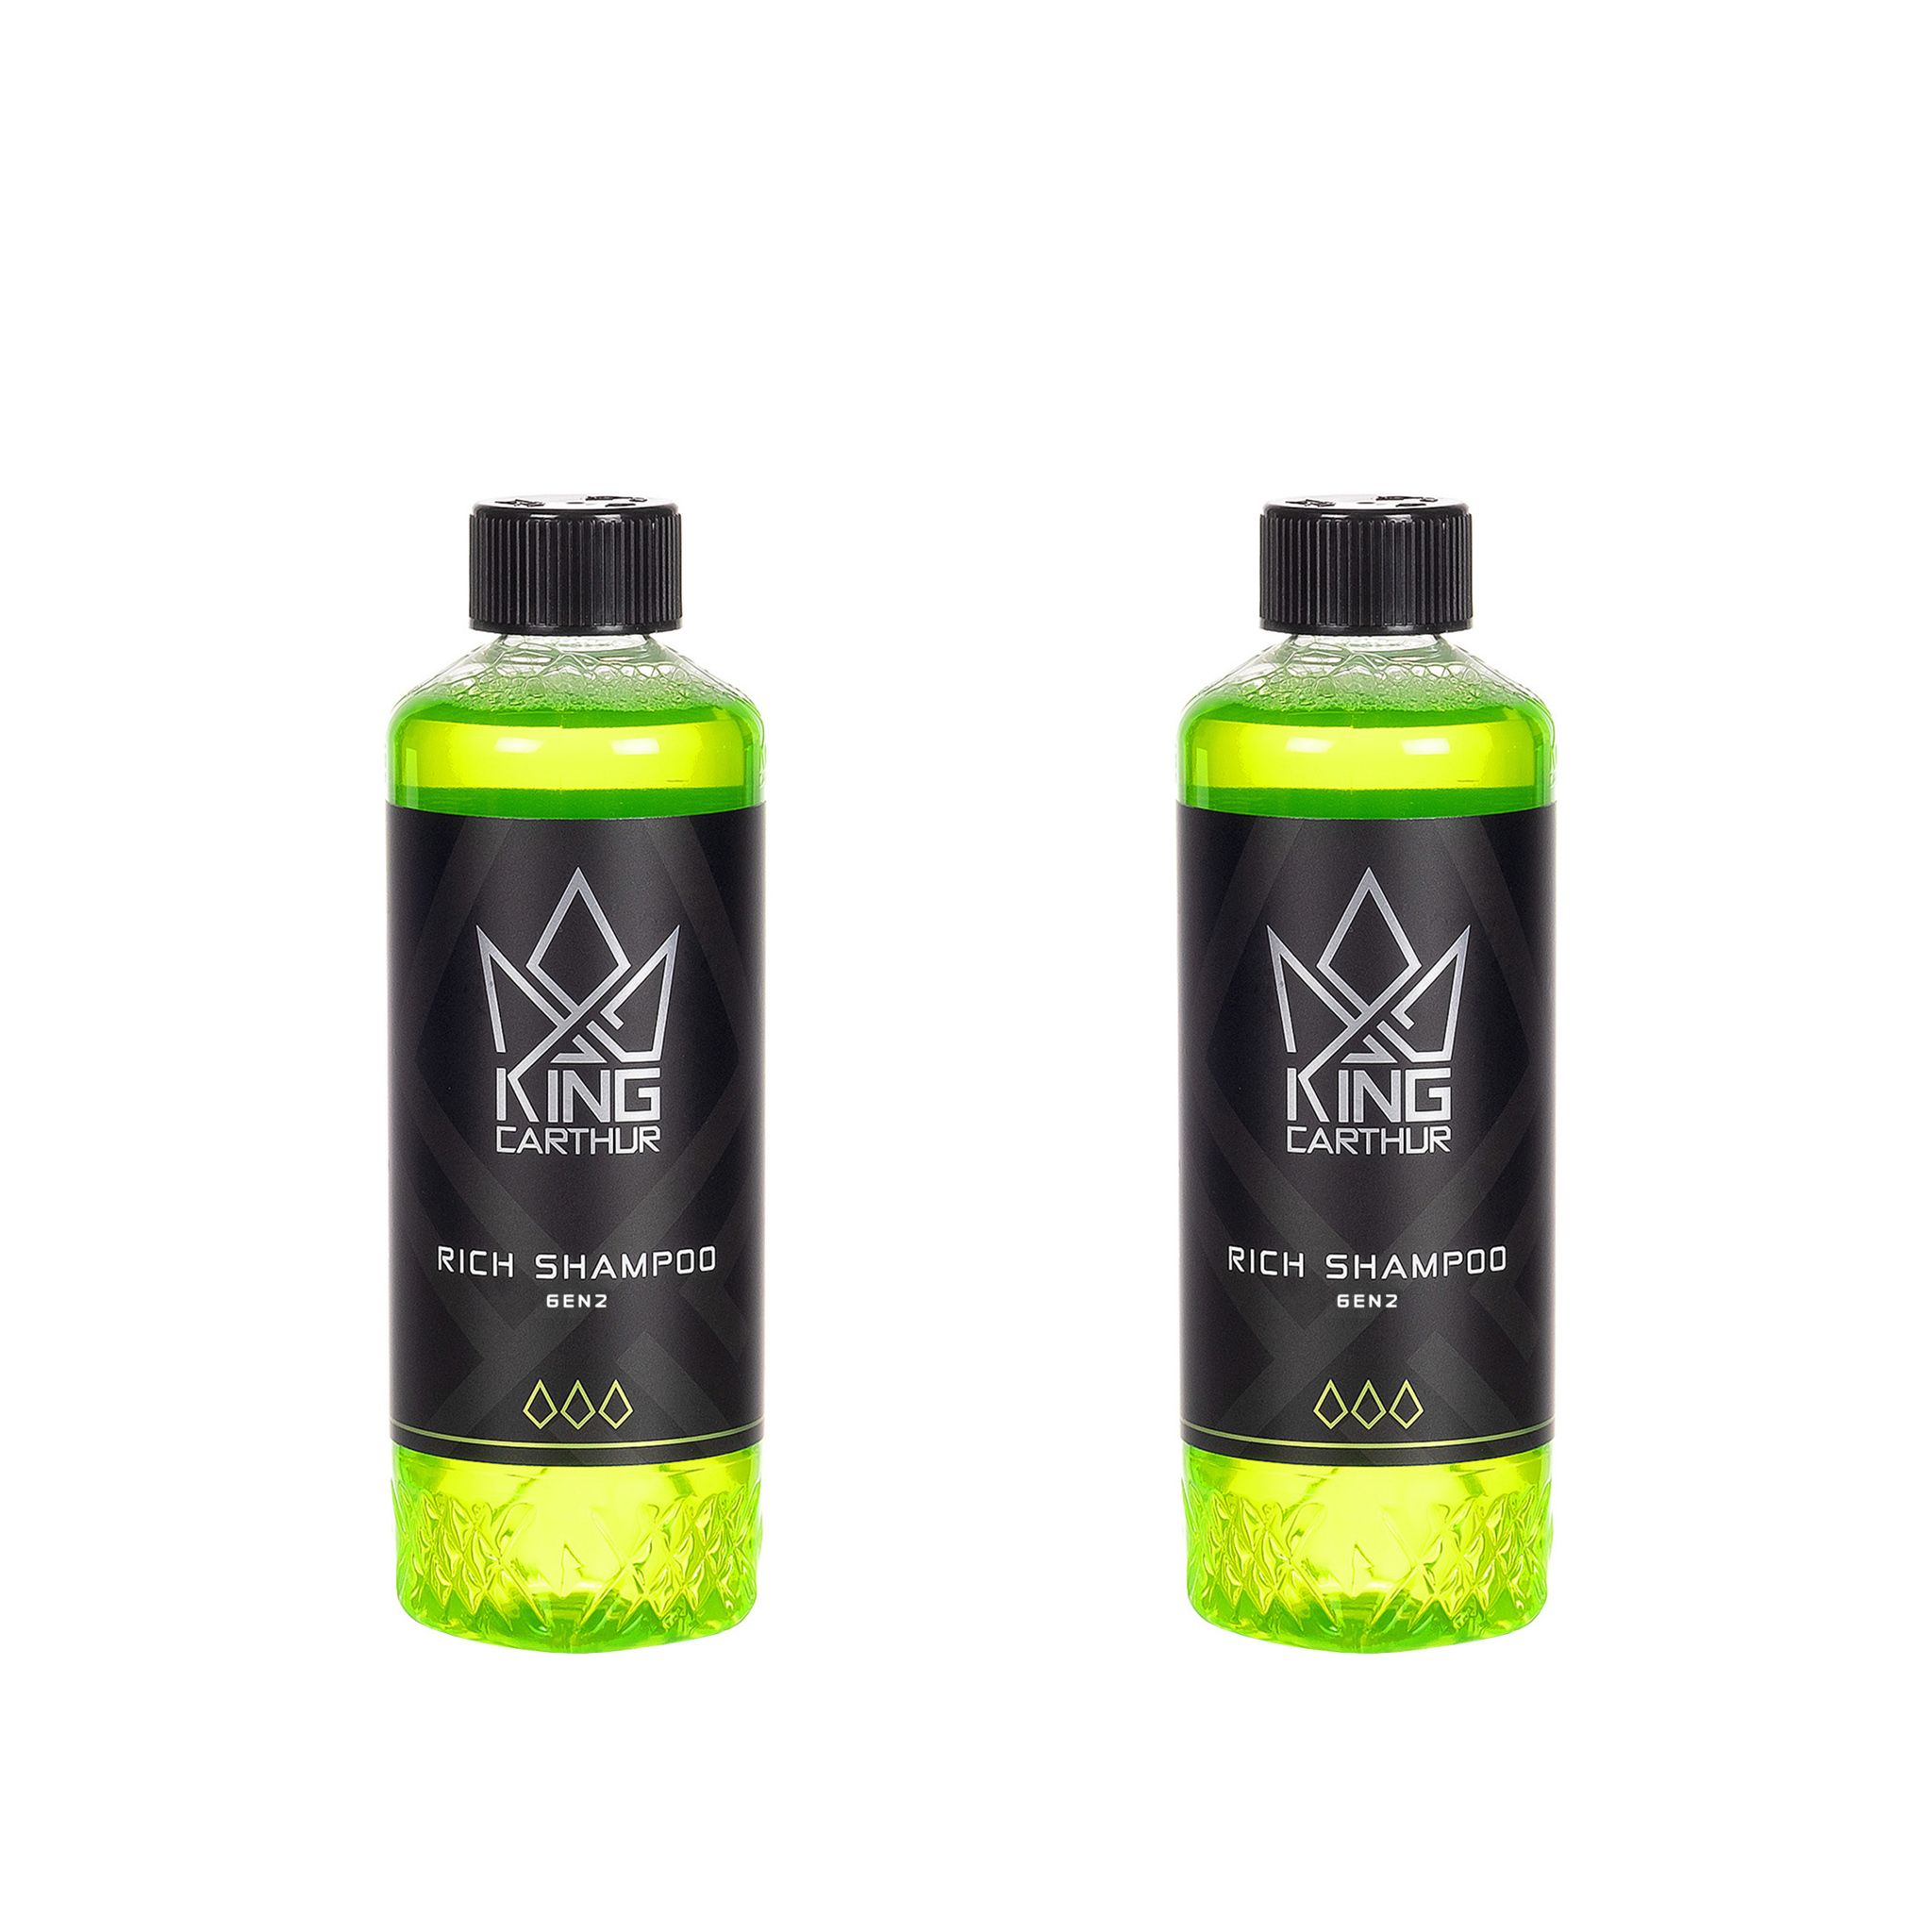 Bilshampo King Carthur Rich Shampoo Gen2, 500 ml, 2 x 500 ml